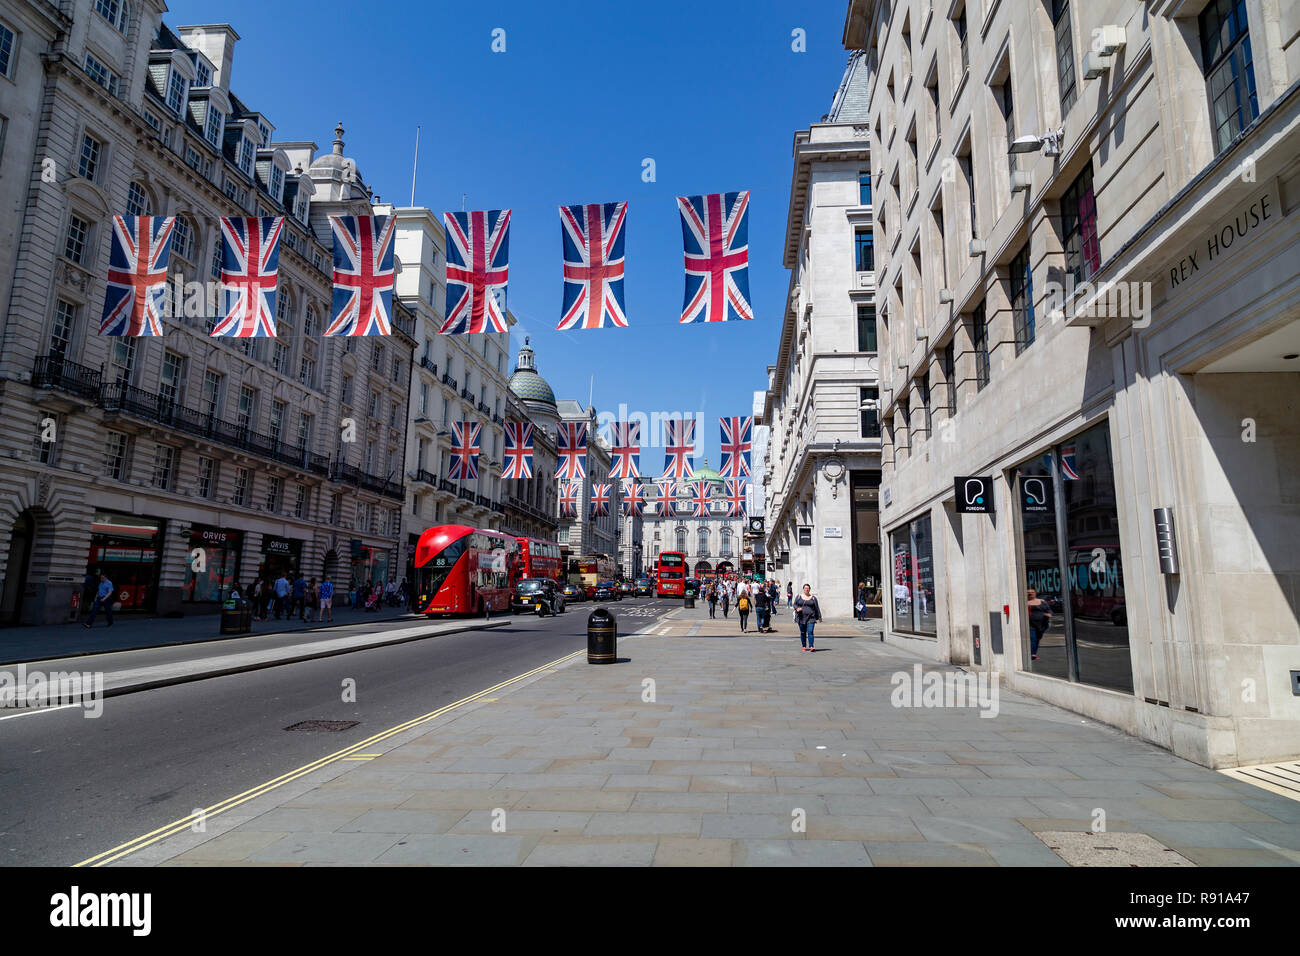 Union Jack Flags along Regents Street to Celebrate the Royal Wedding, London, UK Stock Photo